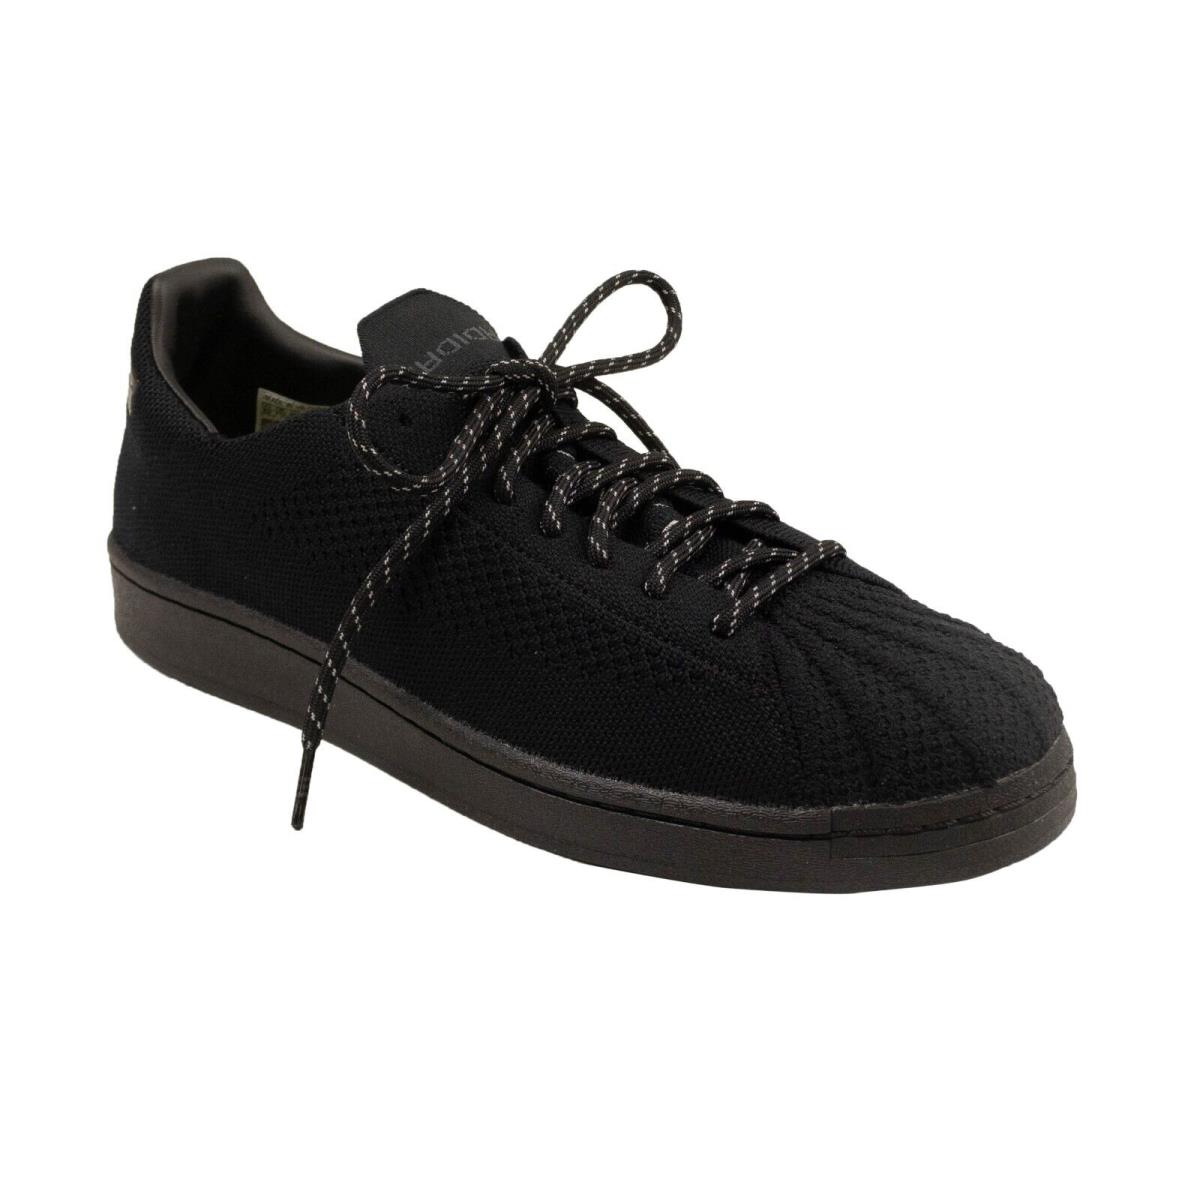 Adidas Black PW Superstar PK Sneakers Size 10/43